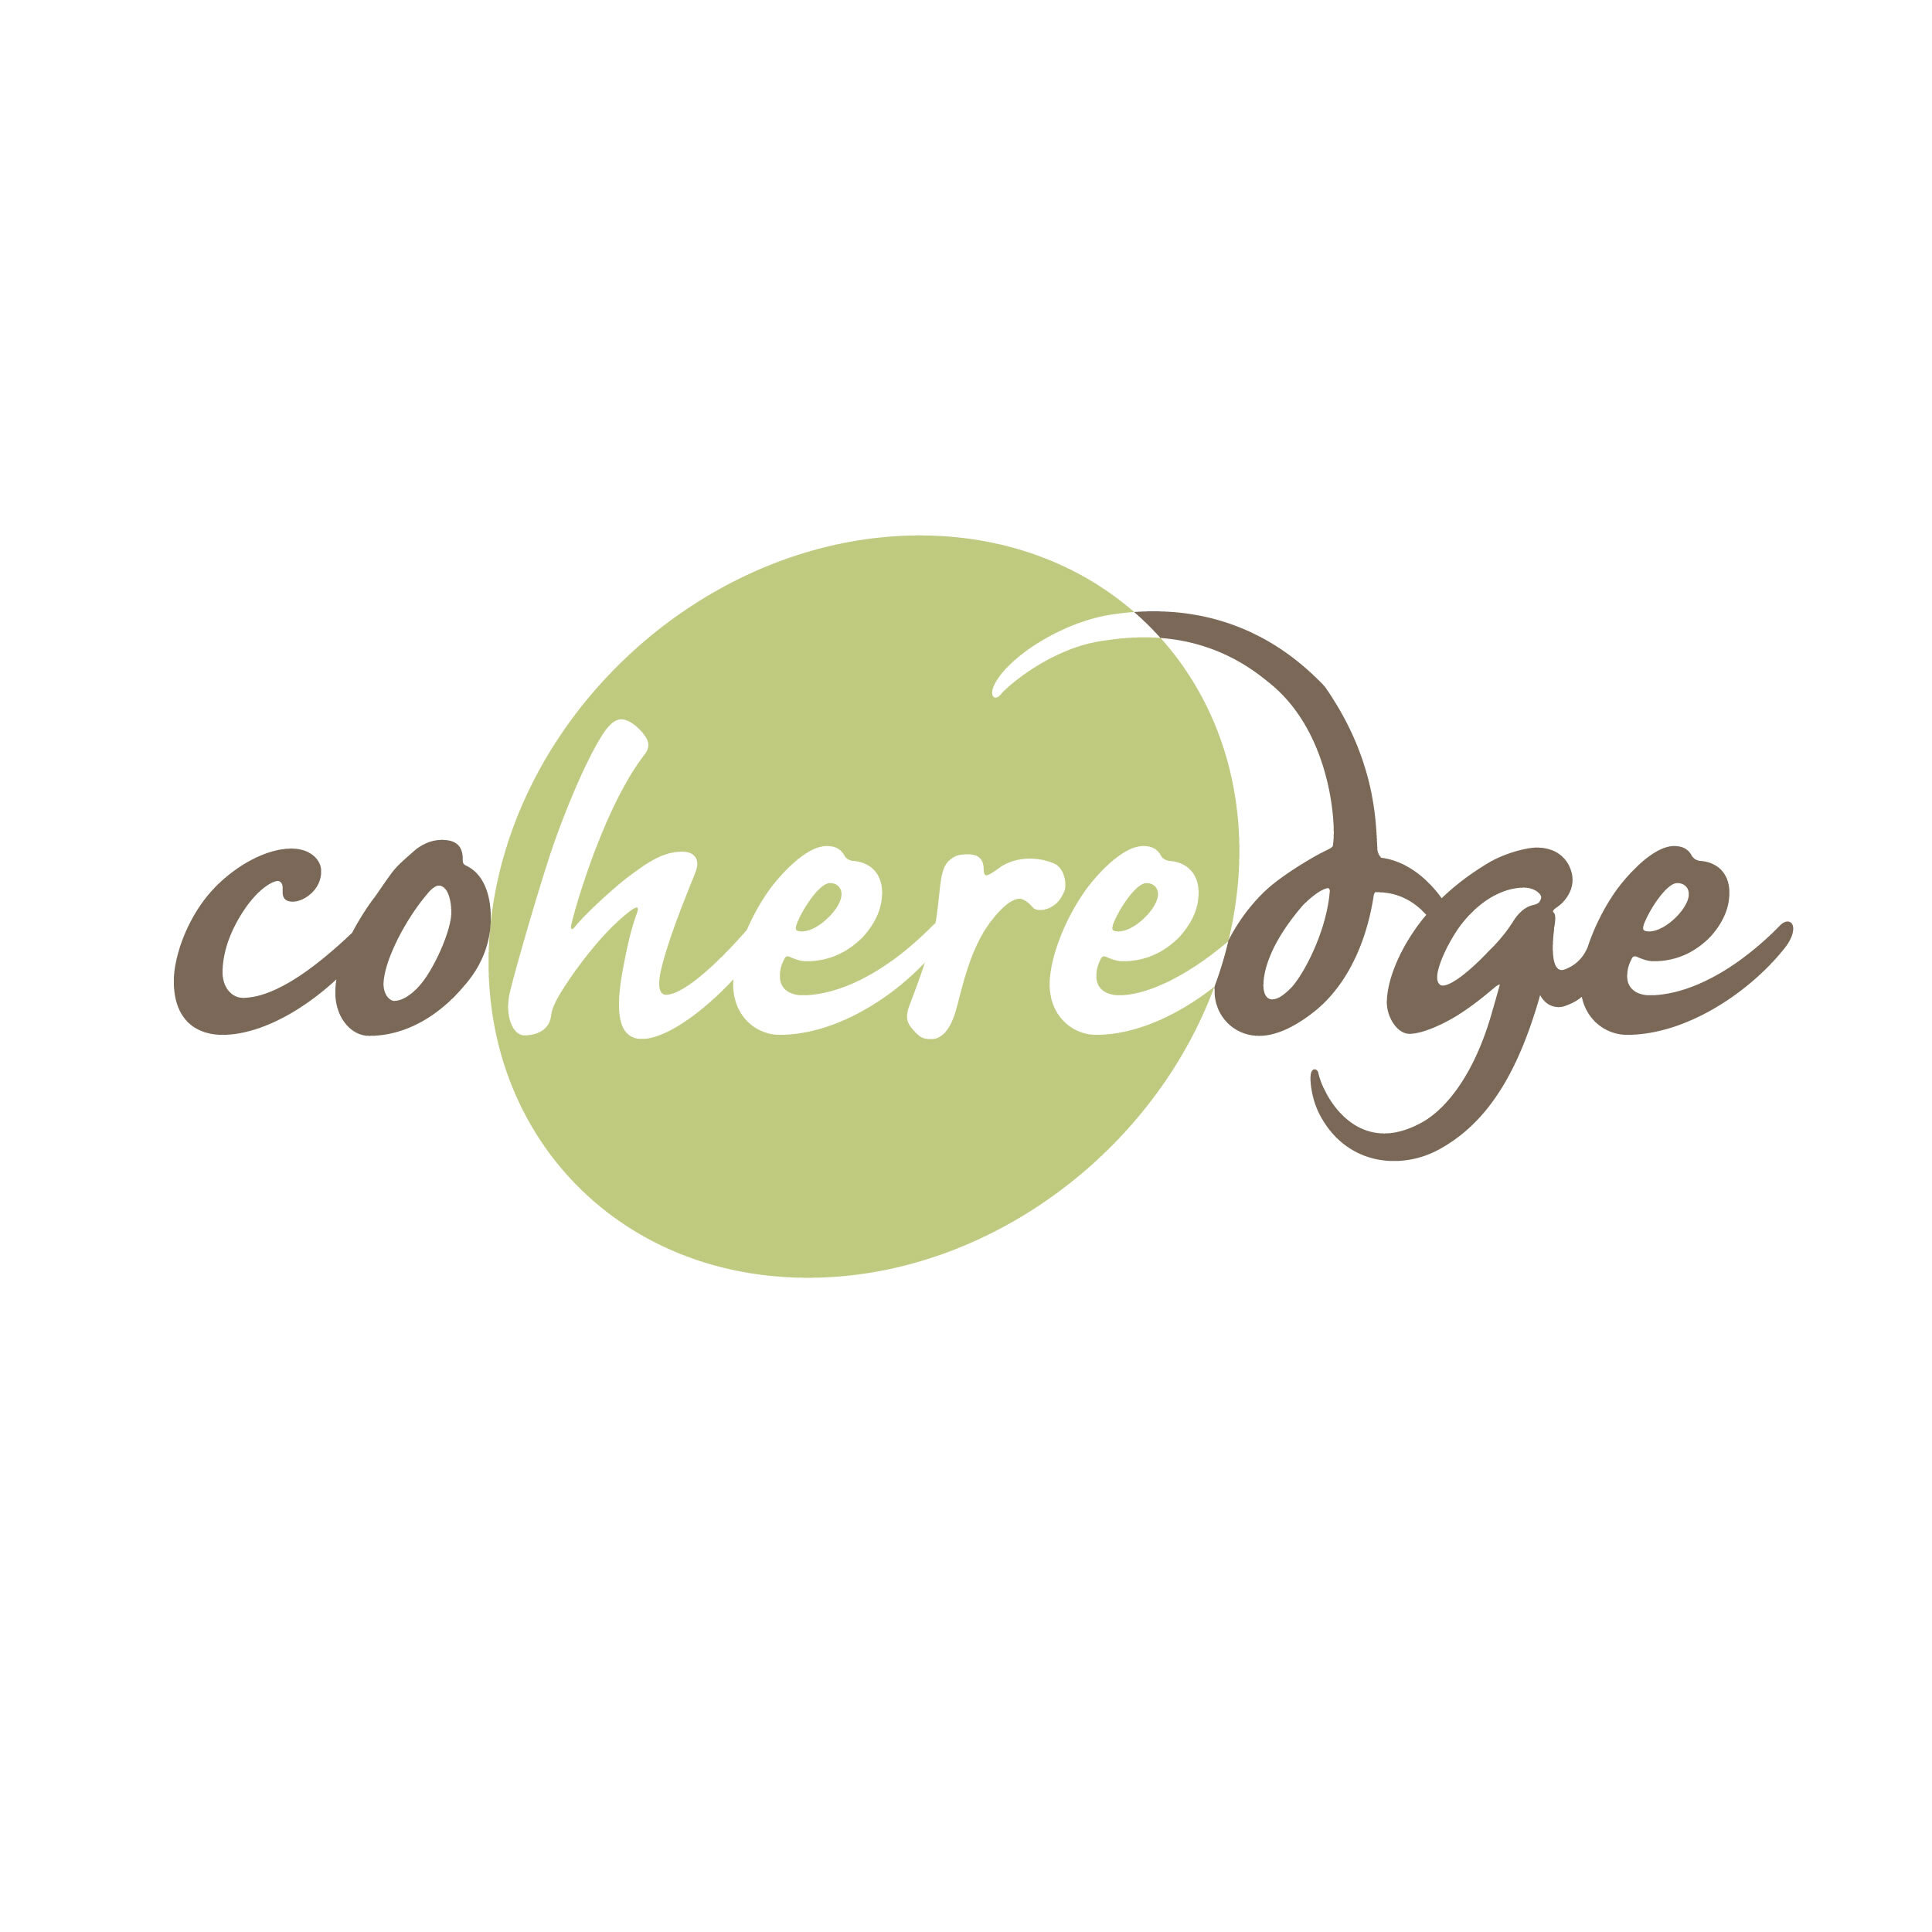 Coheredge.jpg